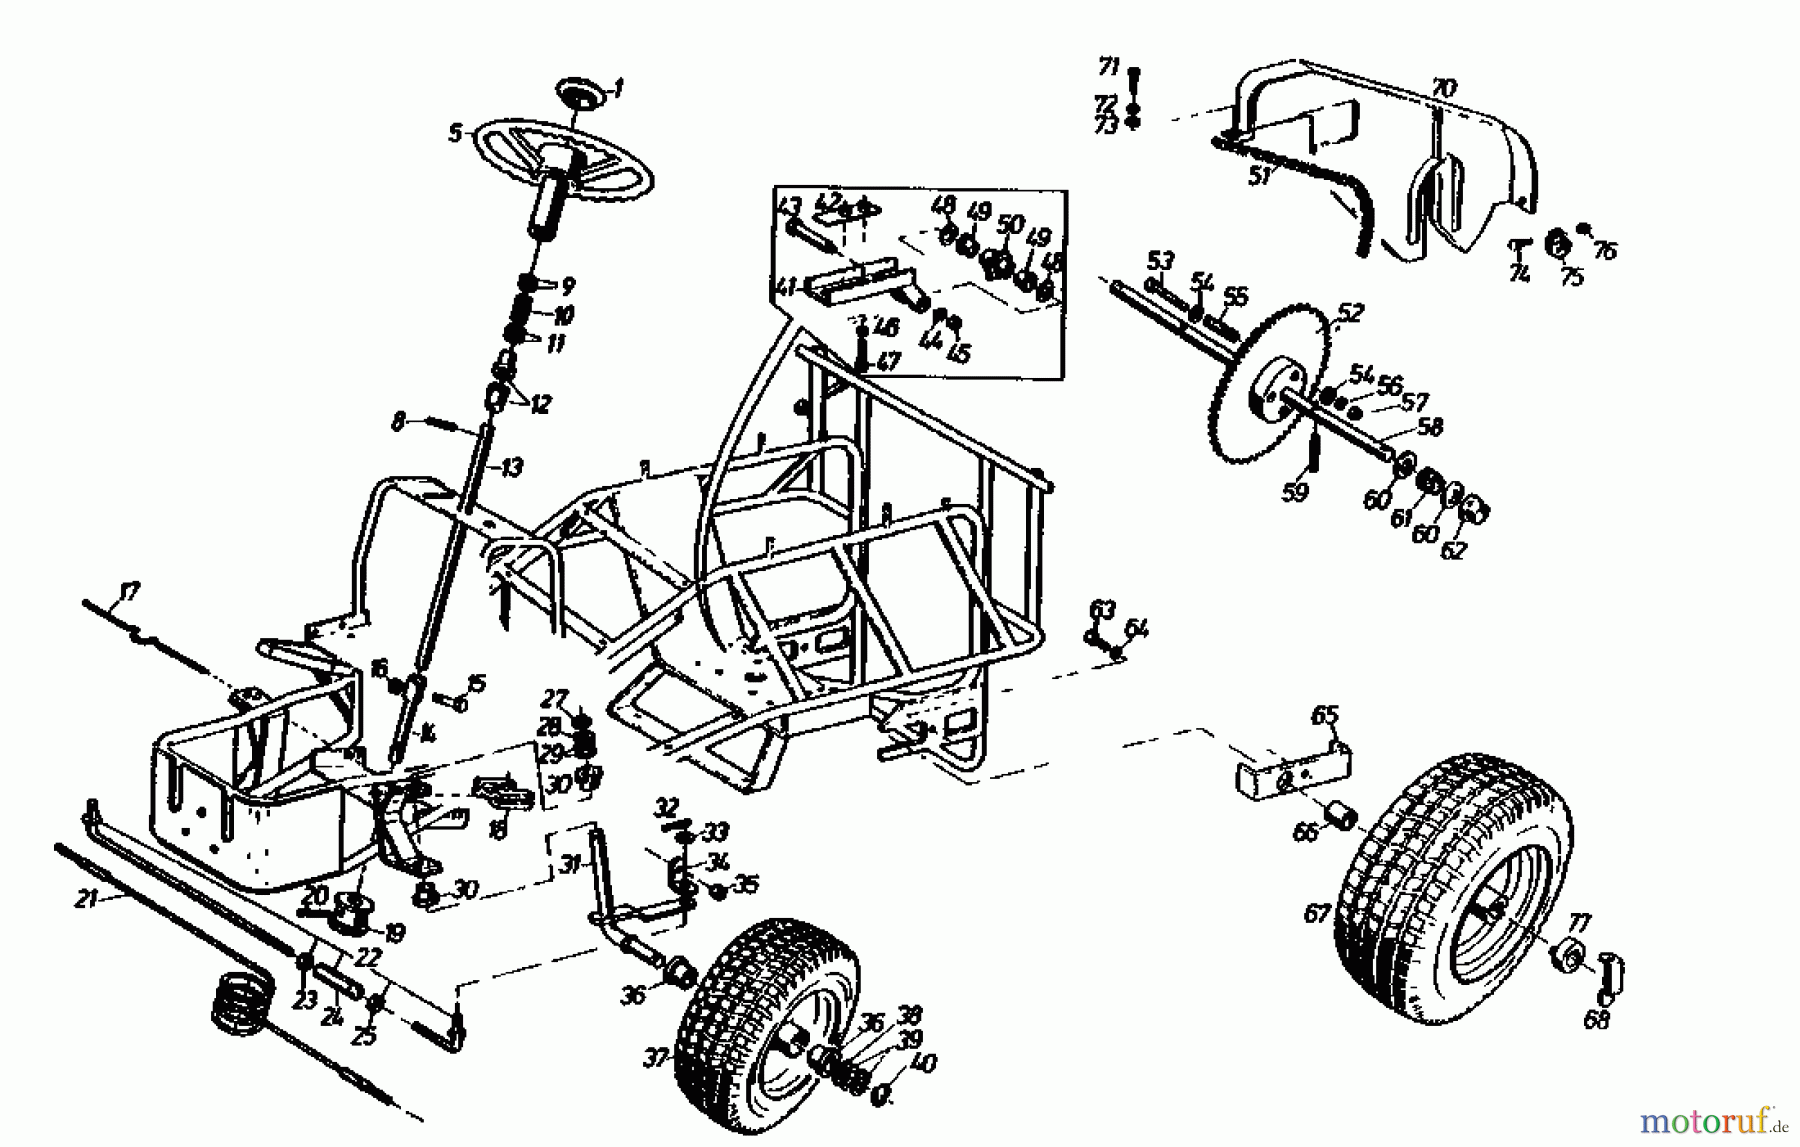  Gutbrod Lawn tractors Sprint 1000 E 02840.04  (1990) Drive system, Steering wheel, Steering, Wheels